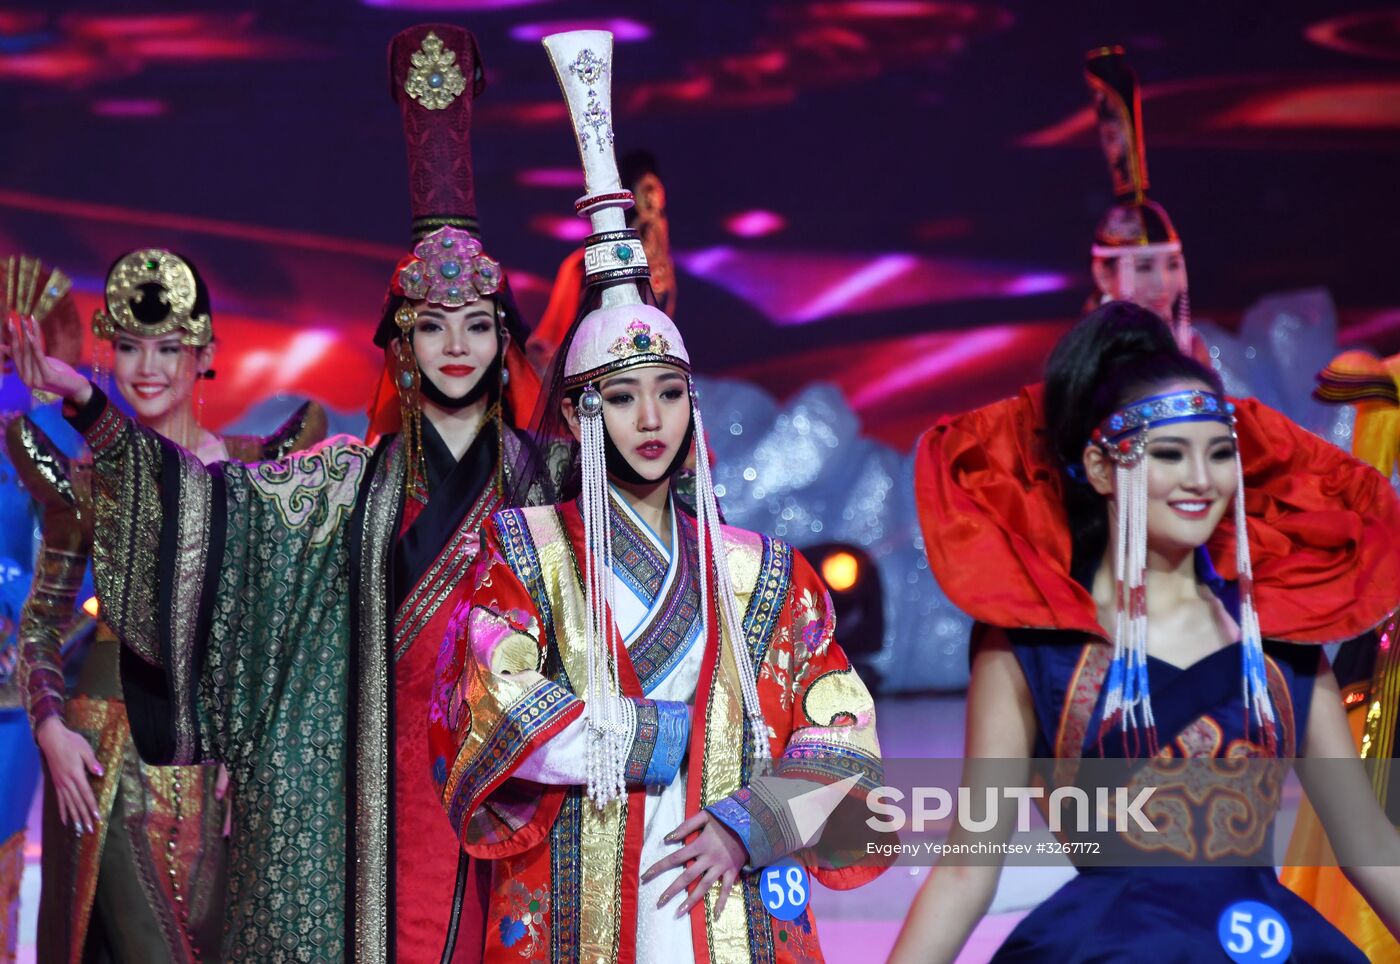 Ambassador of Beauty international beauty pageant in Manchuria